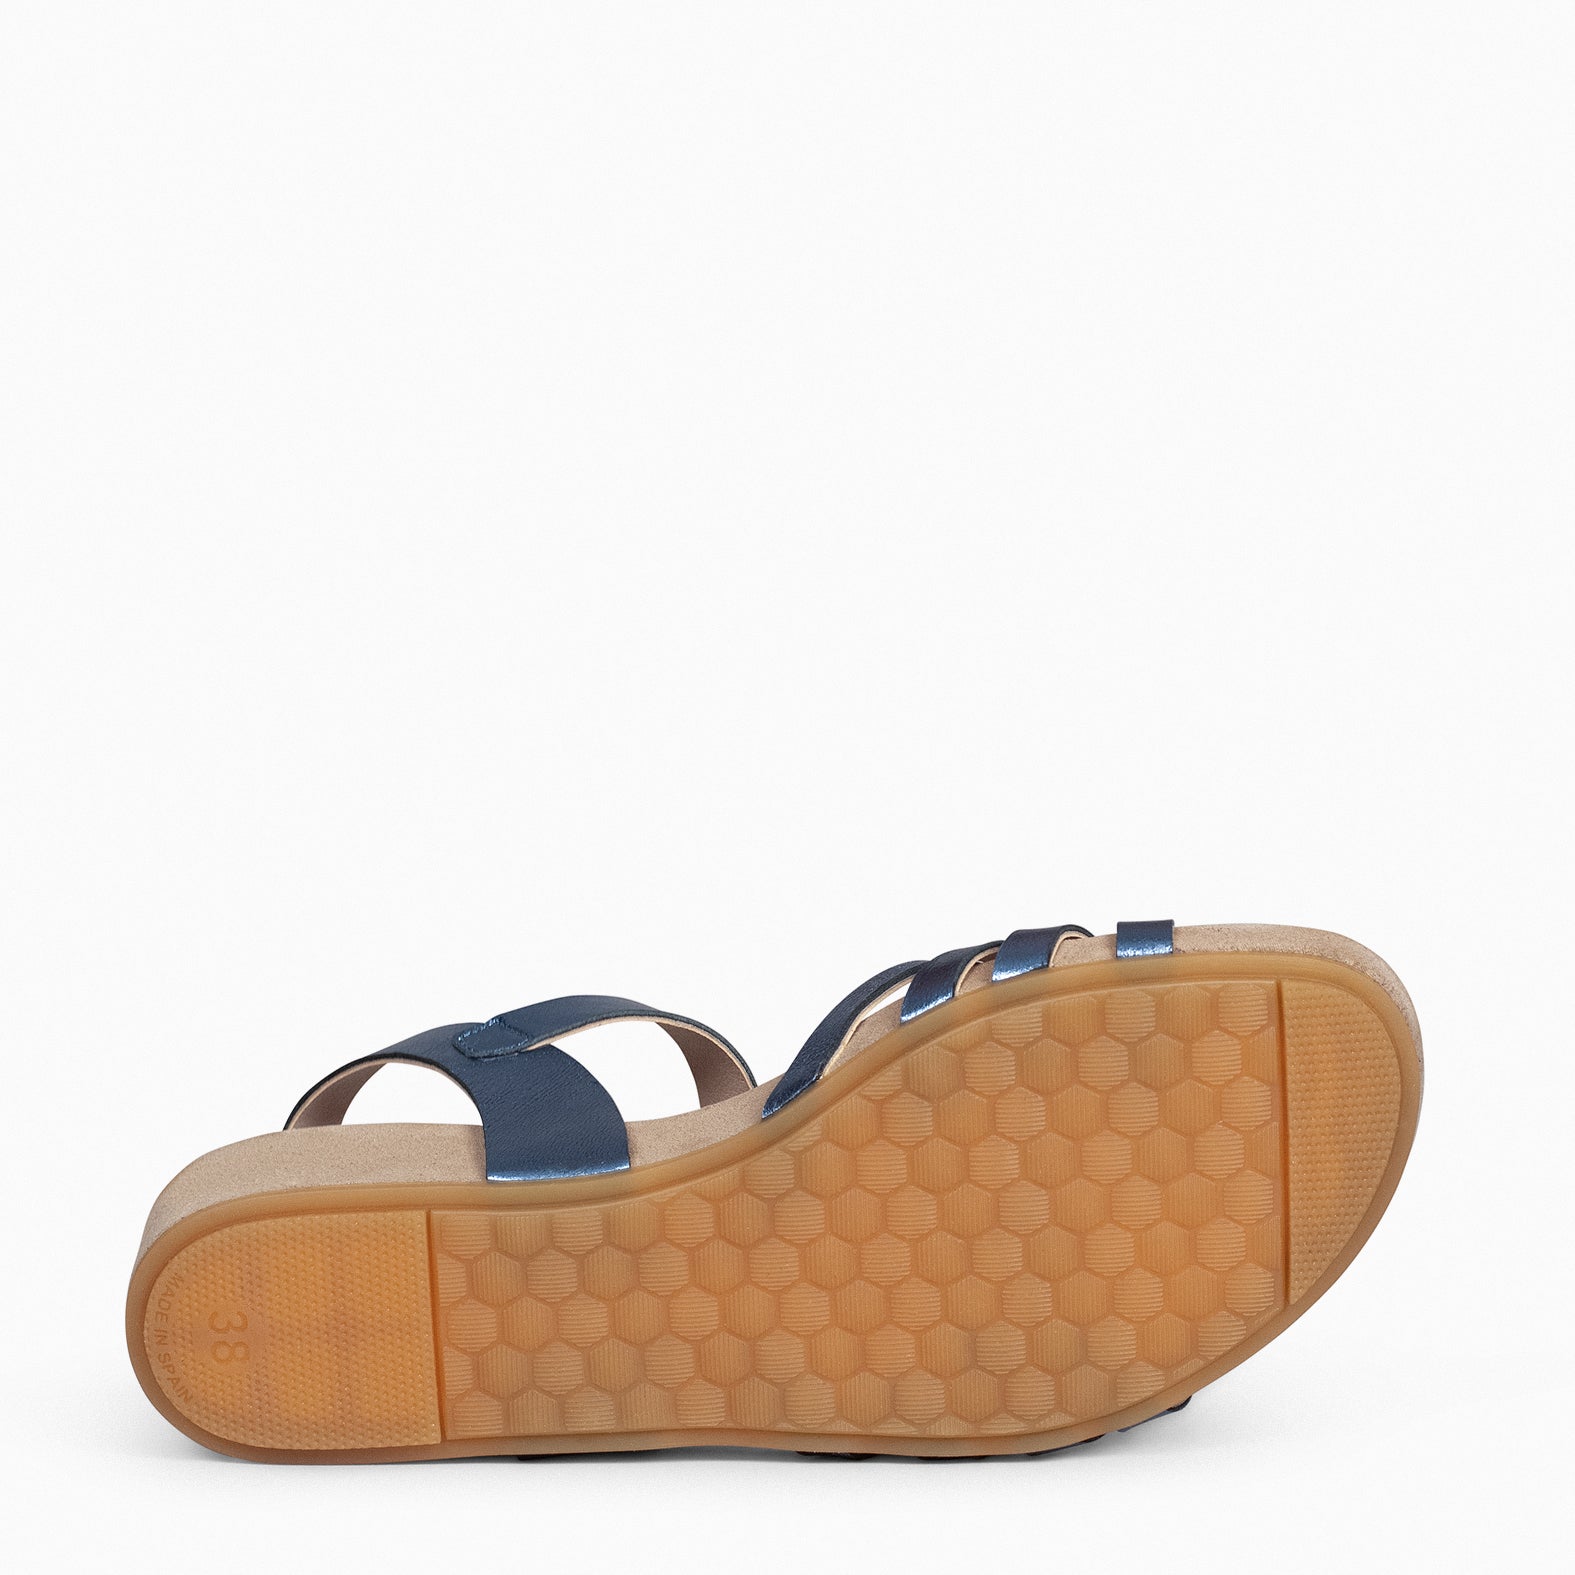 MESINA – BLUE Wedge sandal with metallic straps 